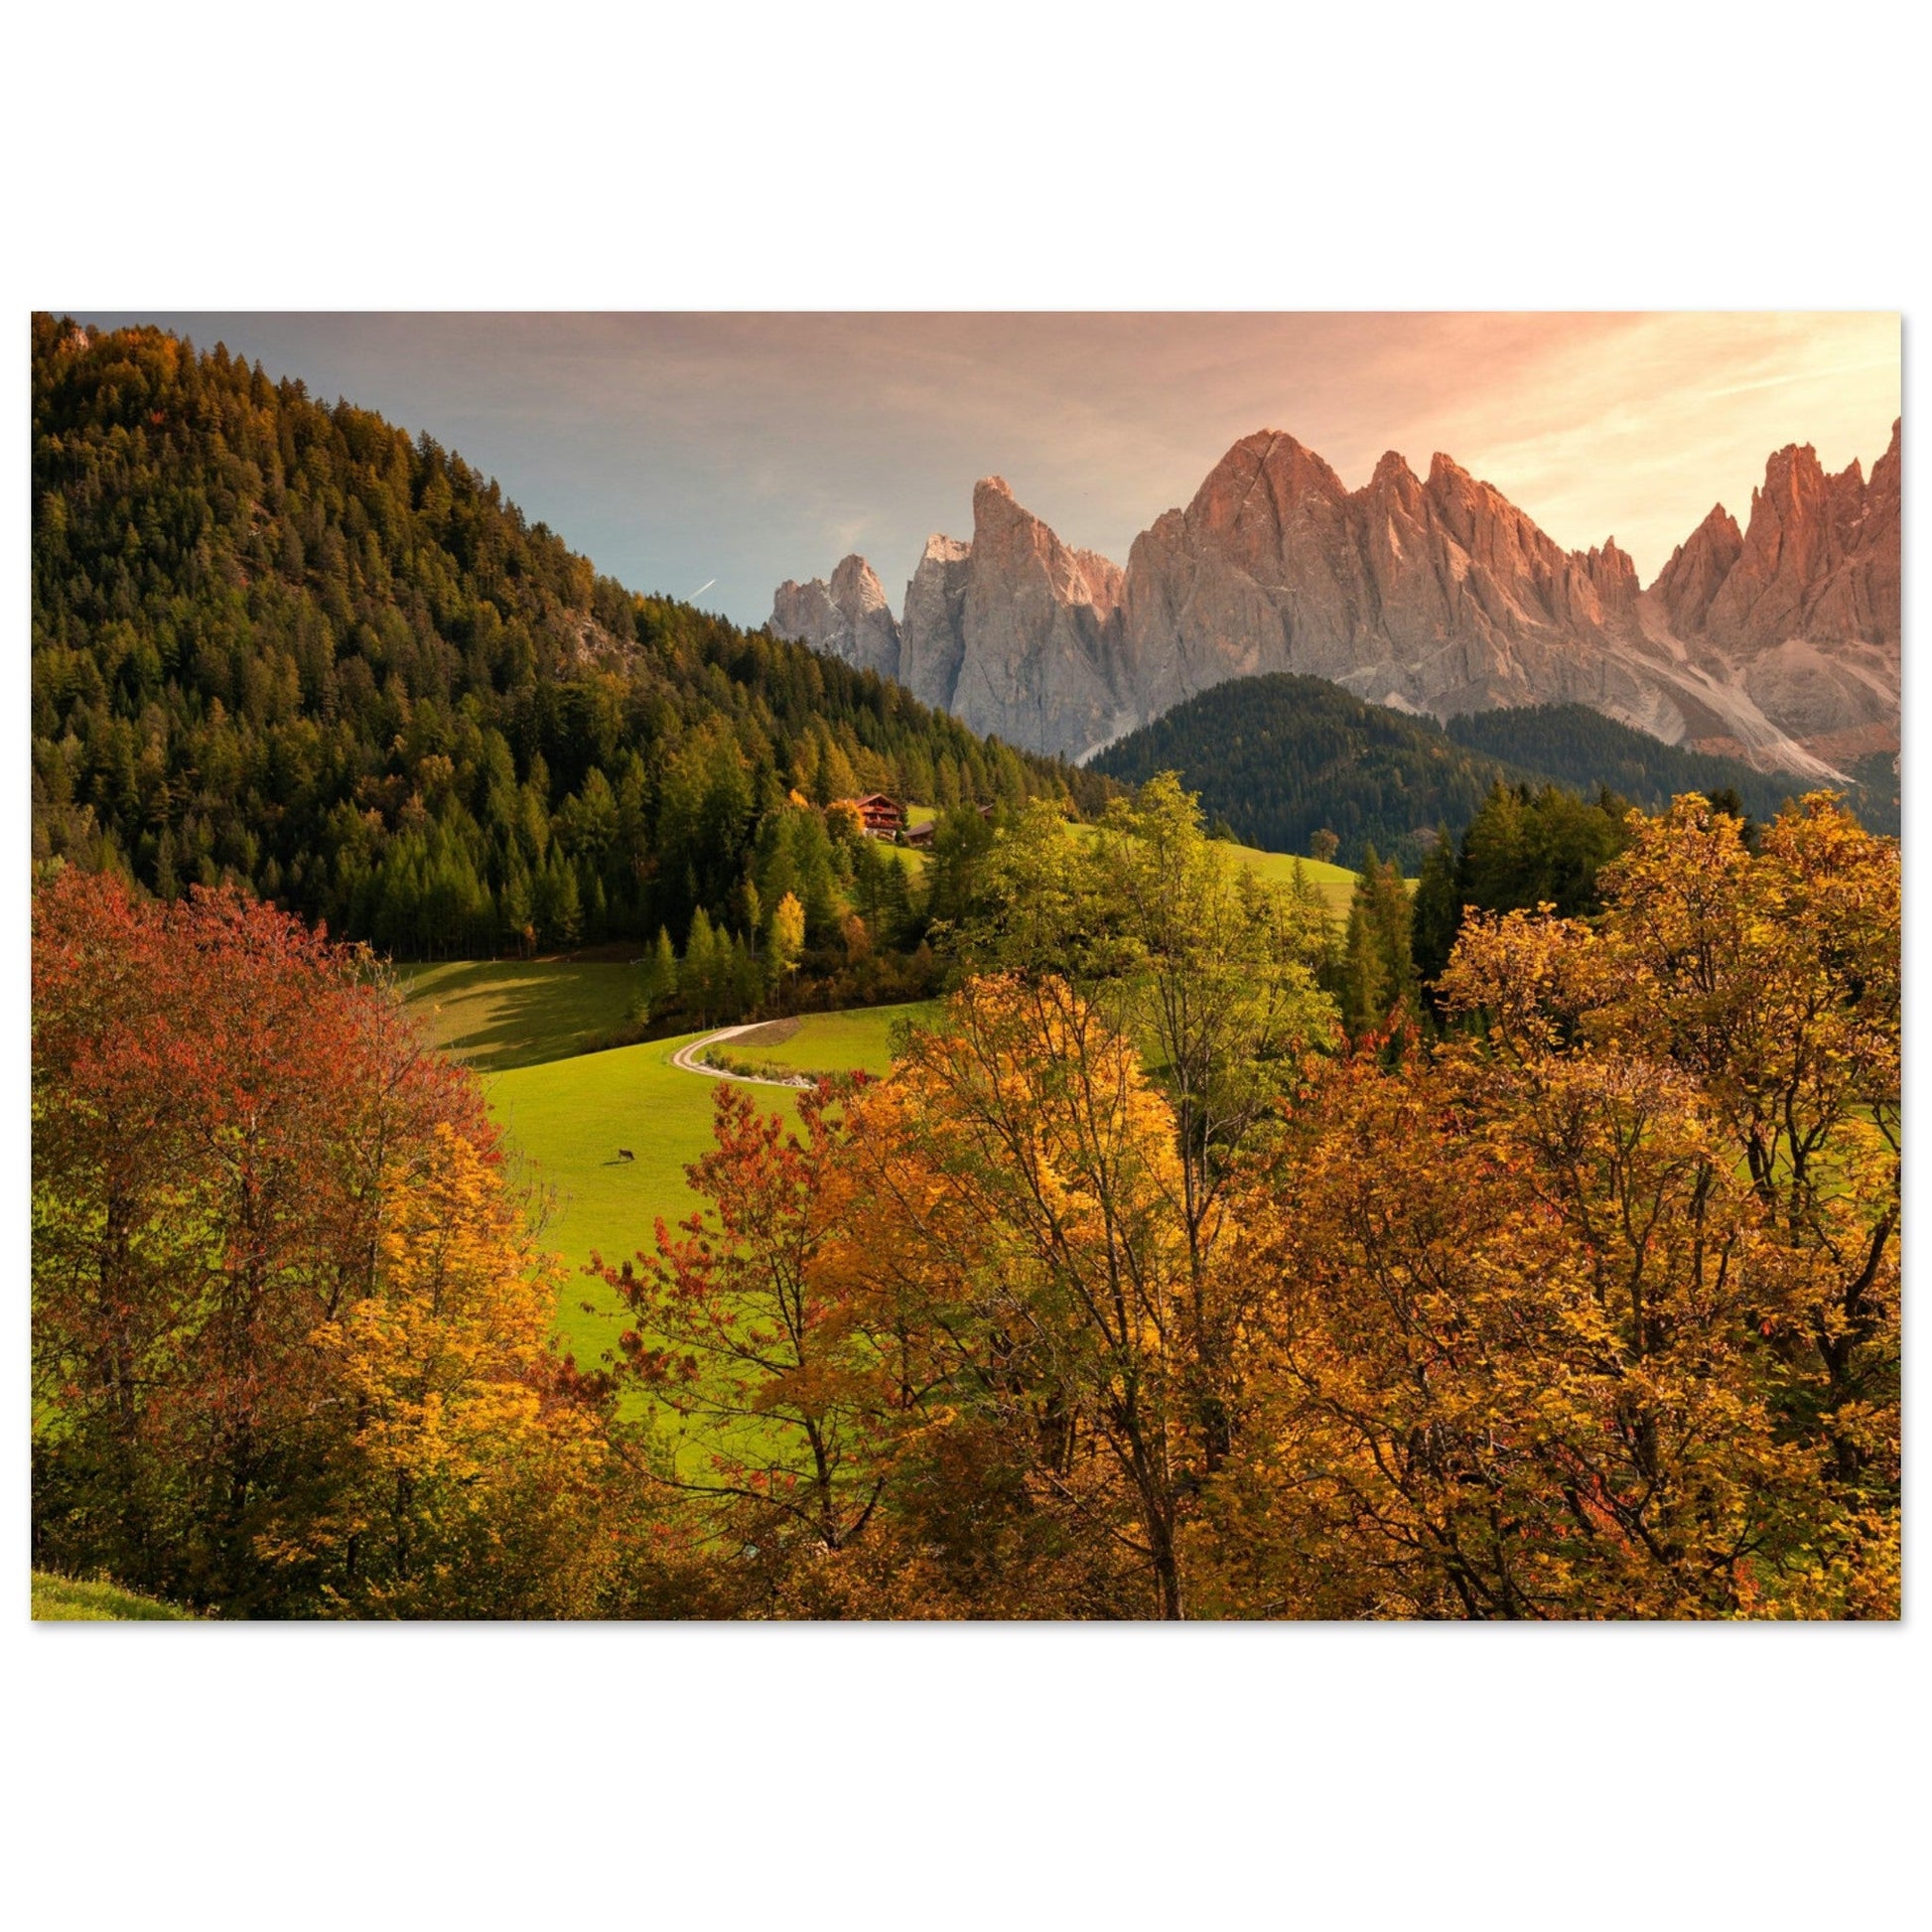 Vente Photo de Funes, Trentin-Haut-Adige, Italie #3 - Tableau photo paysage